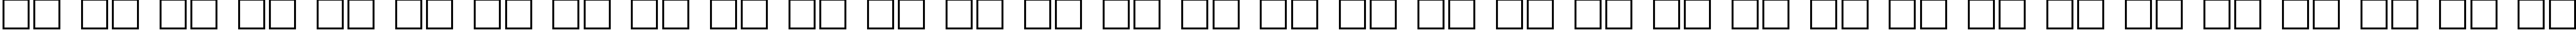 Пример написания русского алфавита шрифтом AGHlvCyrillic Normal80n